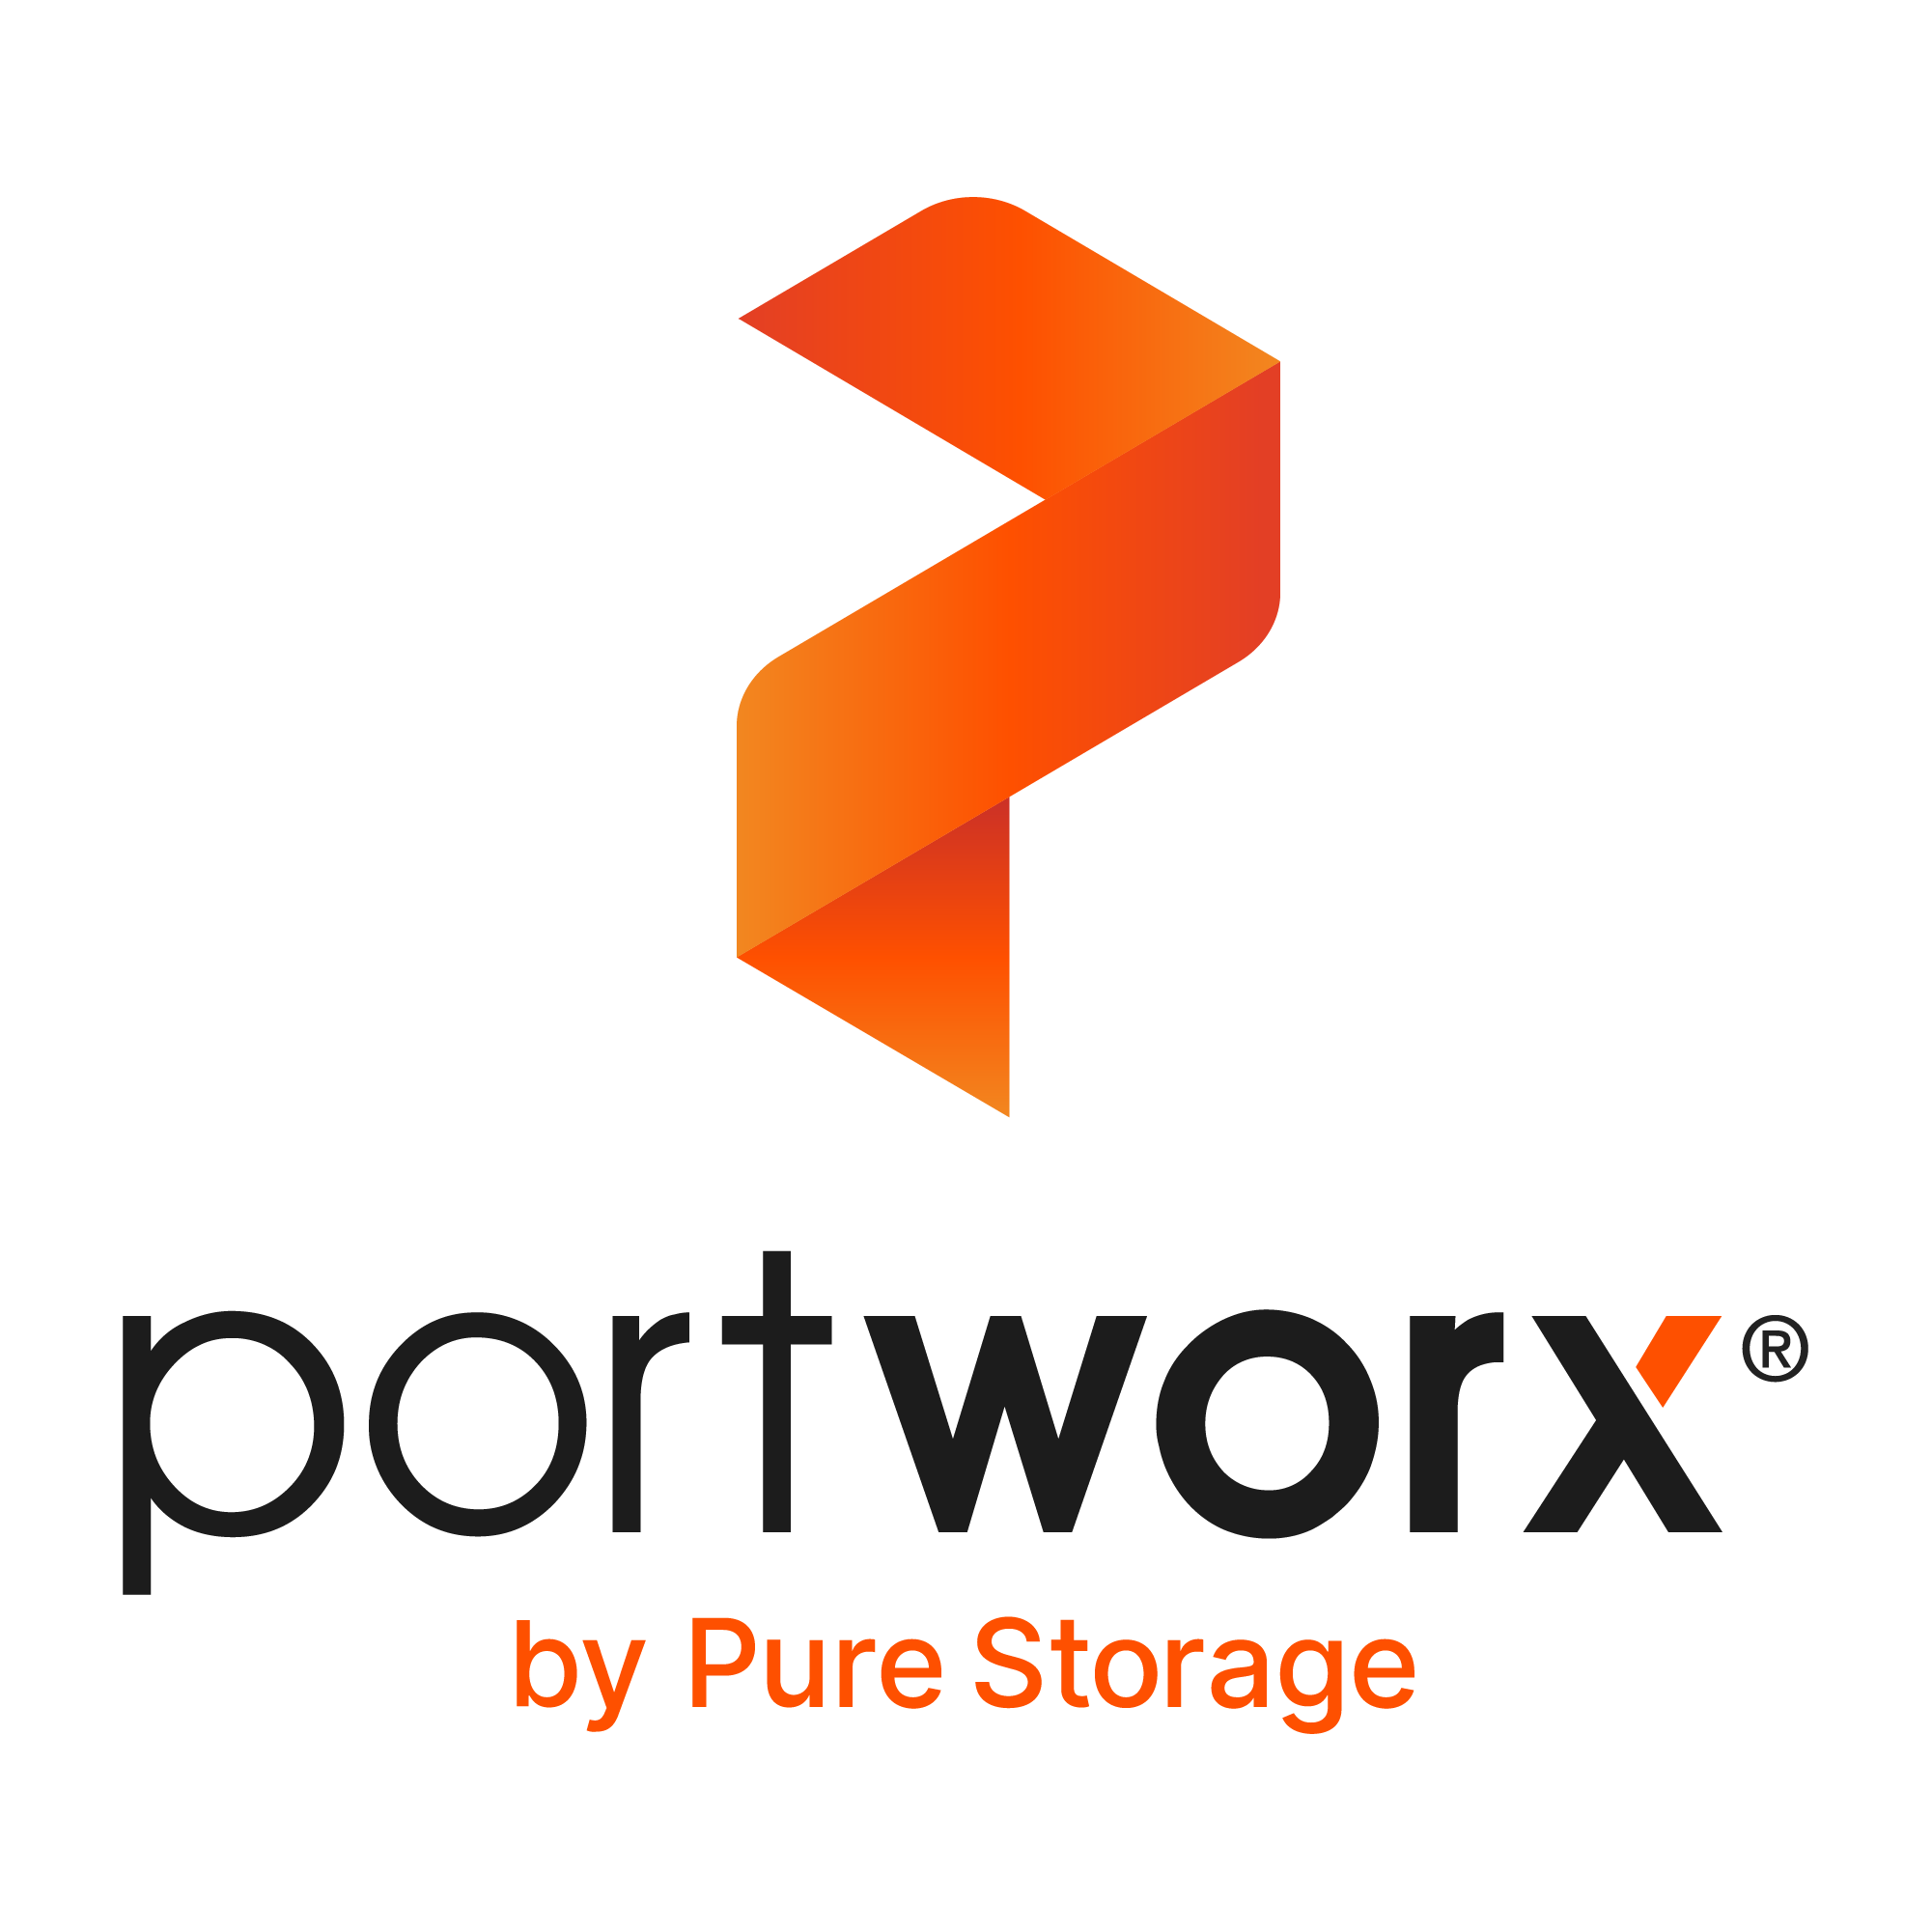 Portworx by Pure Storage